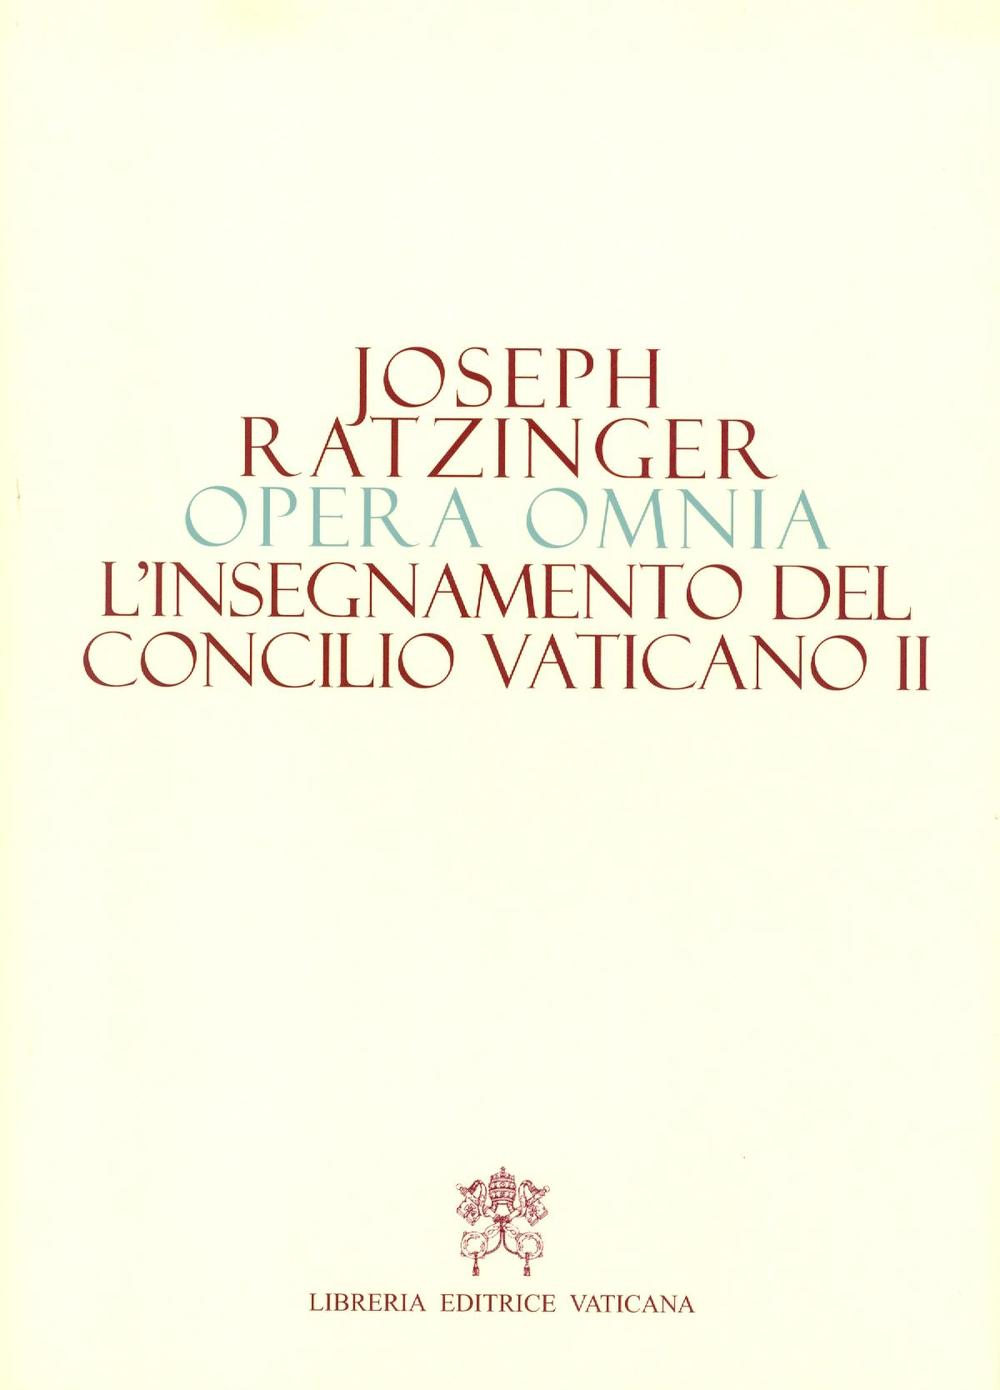 Image of Opera omnia di Joseph Ratzinger